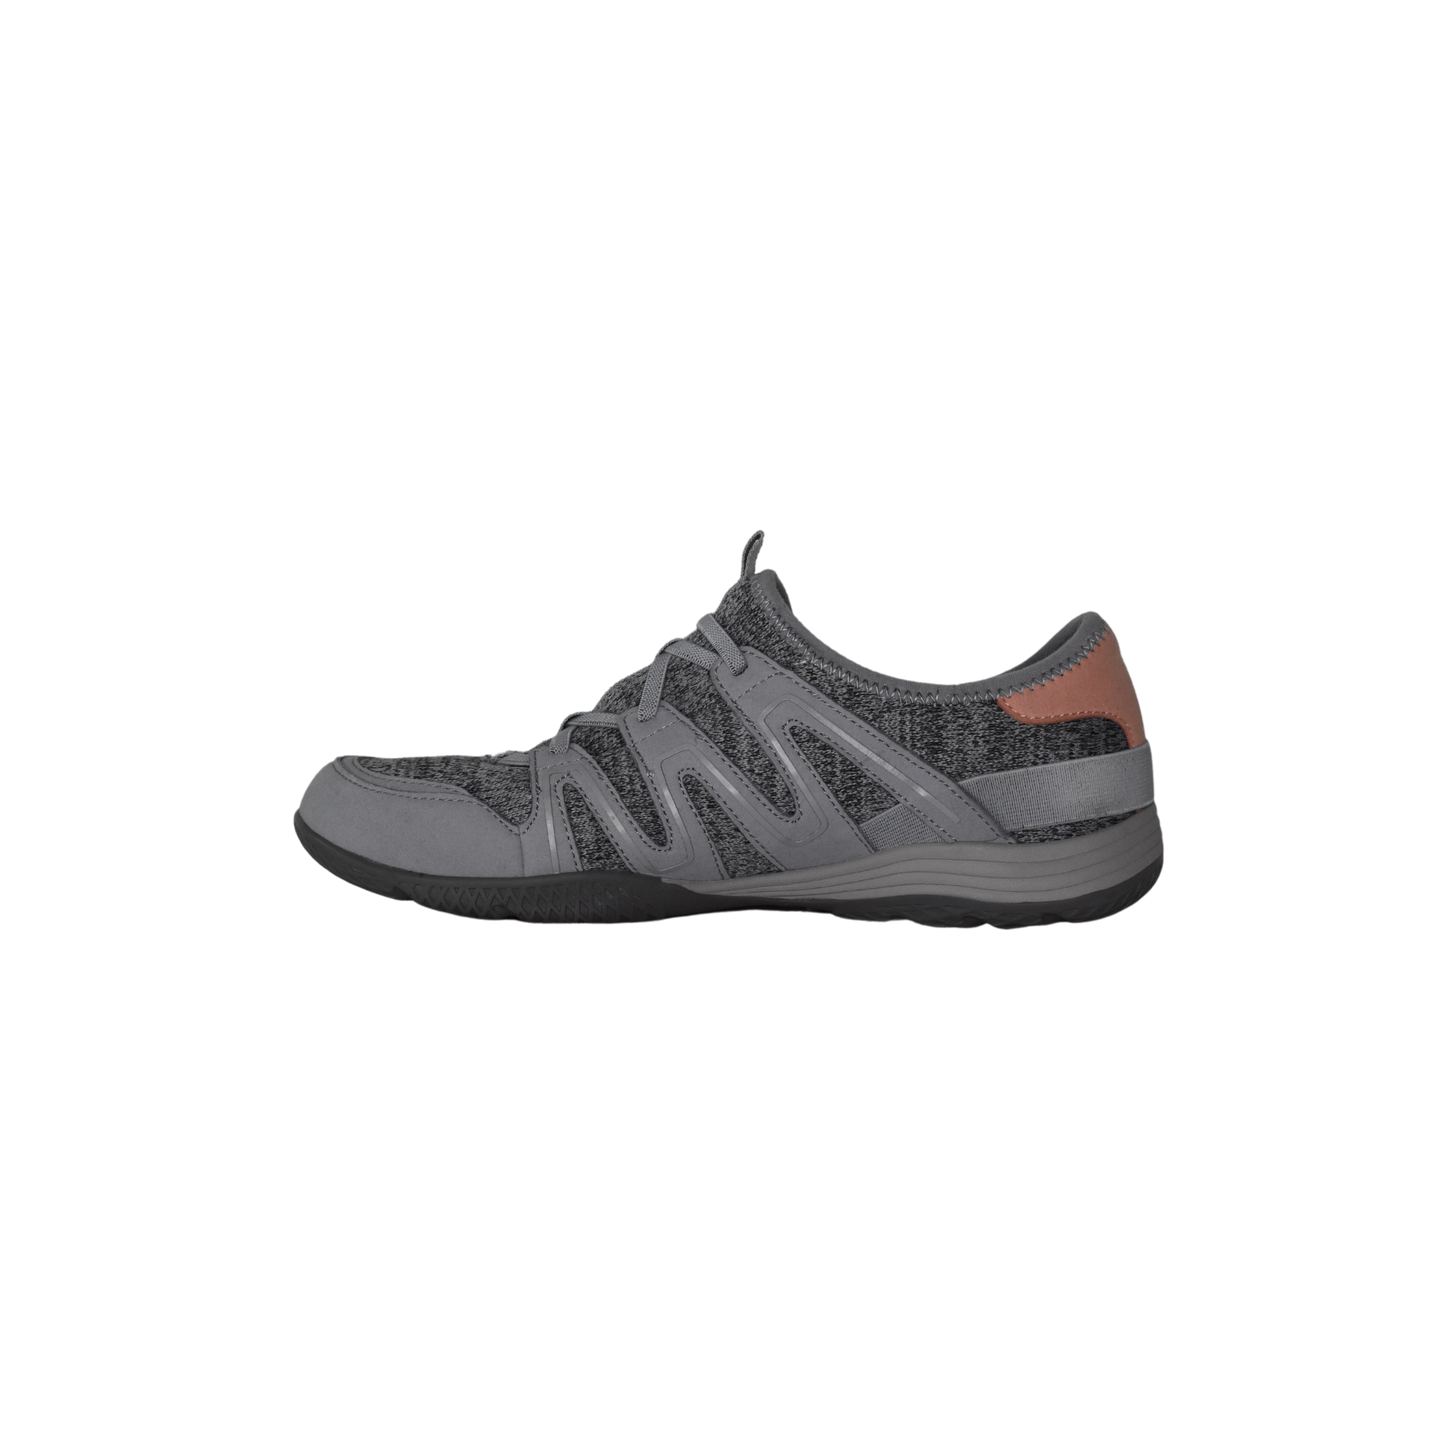 Easy Spirit Sneakers Light Gray Size 7.5 SKU 000336-2